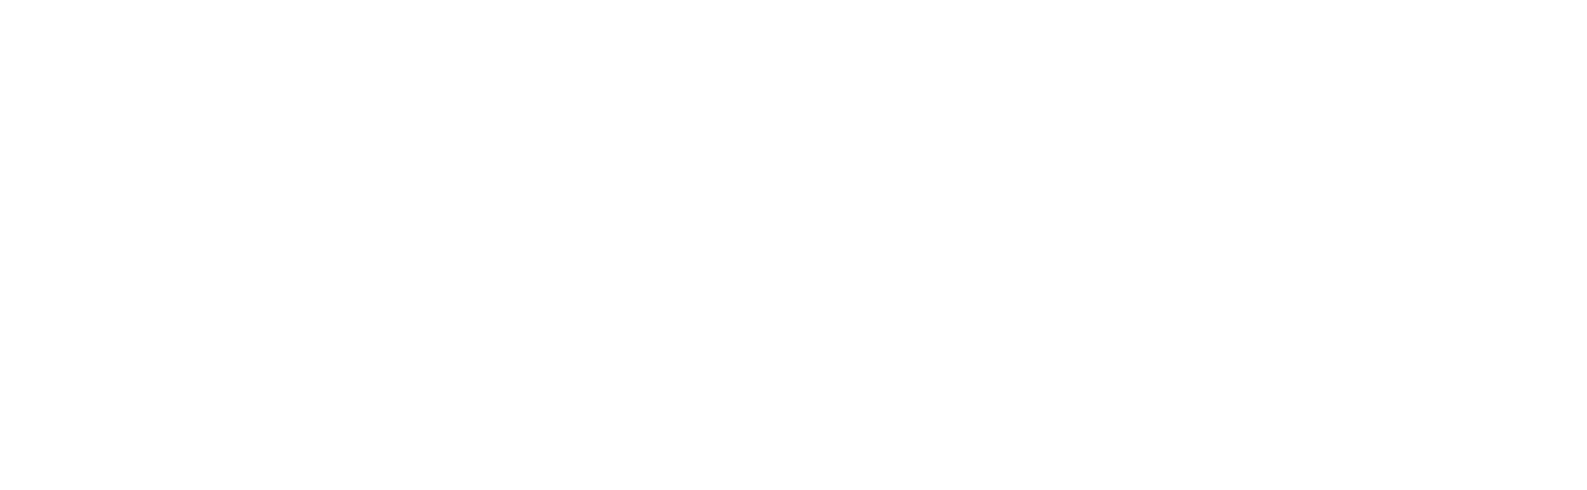 China Mobile logo grand pour les fonds sombres (PNG transparent)